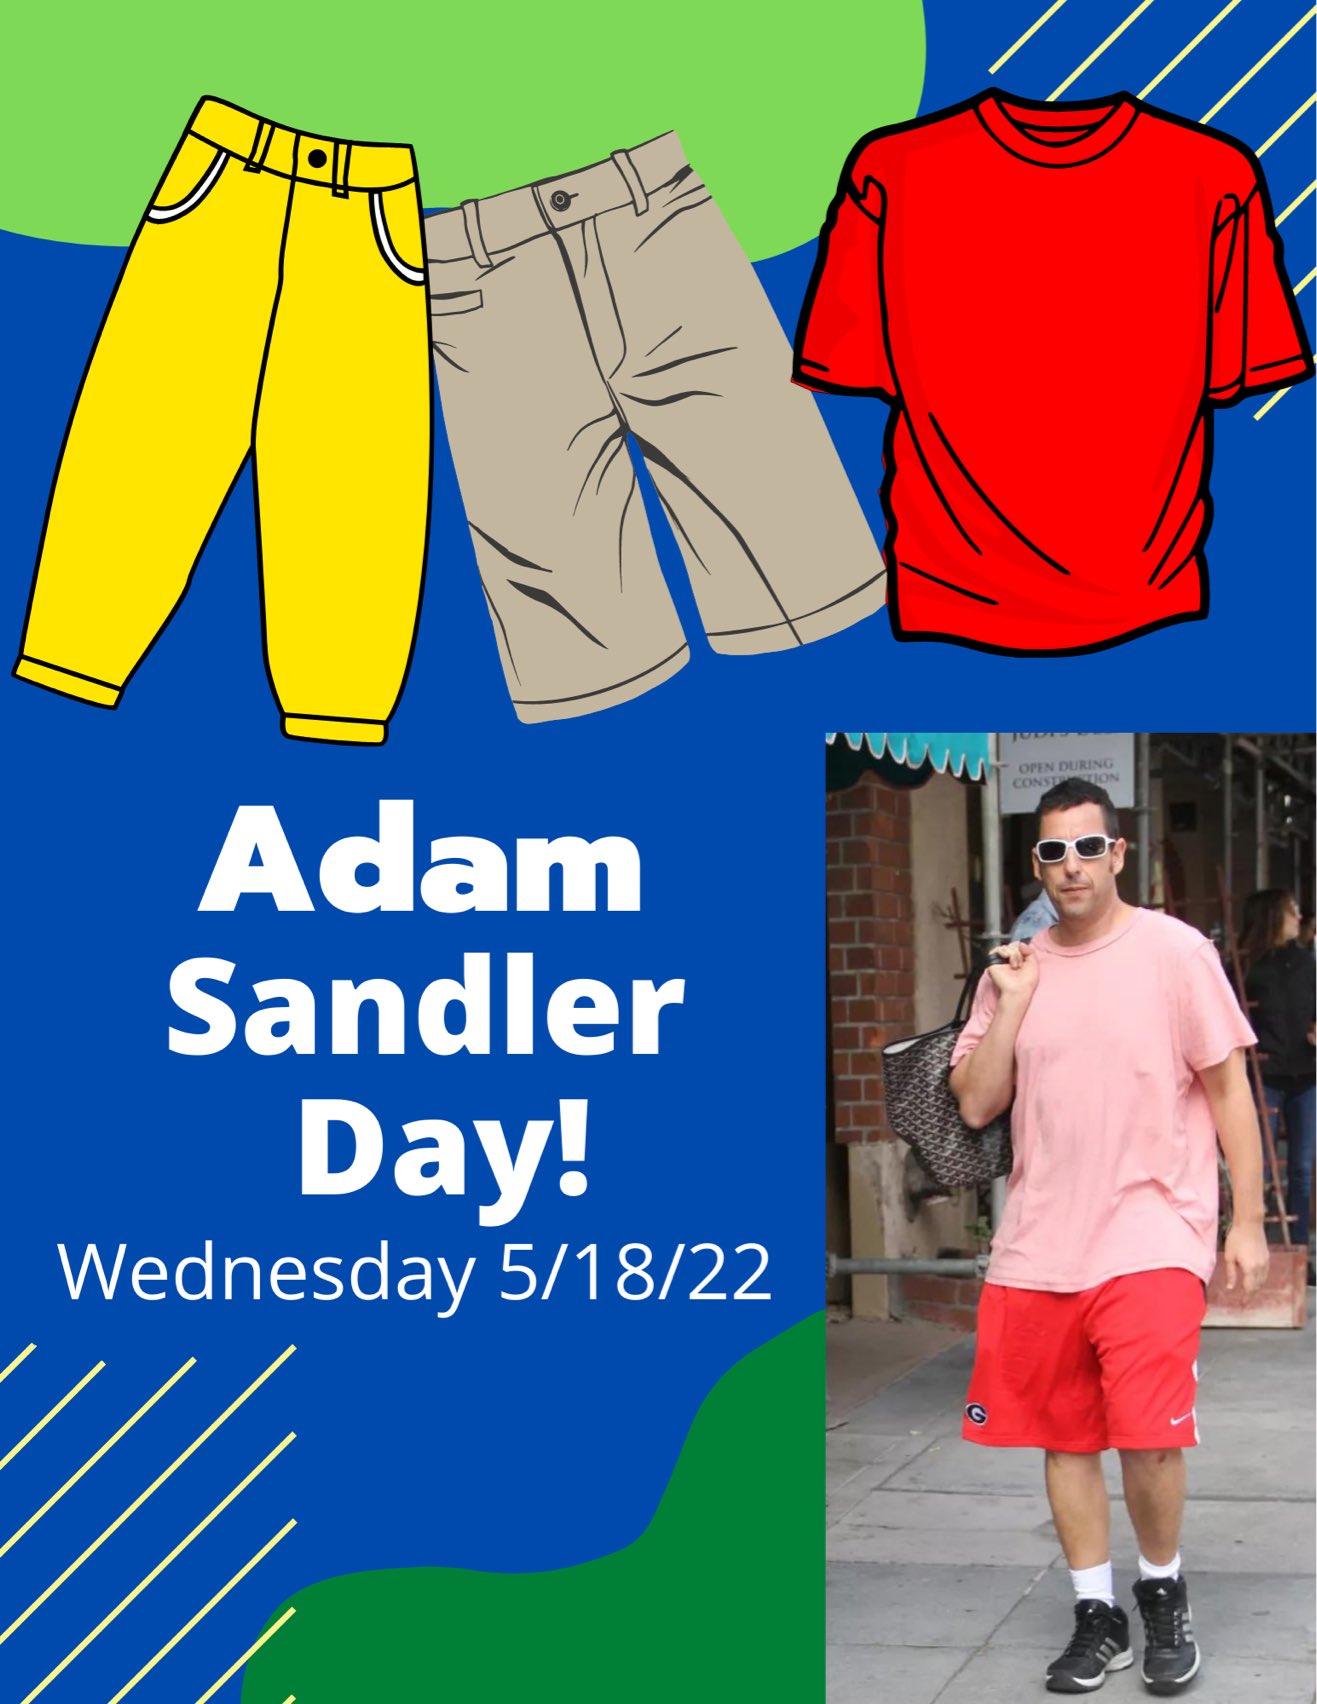 dress like adam sandler day